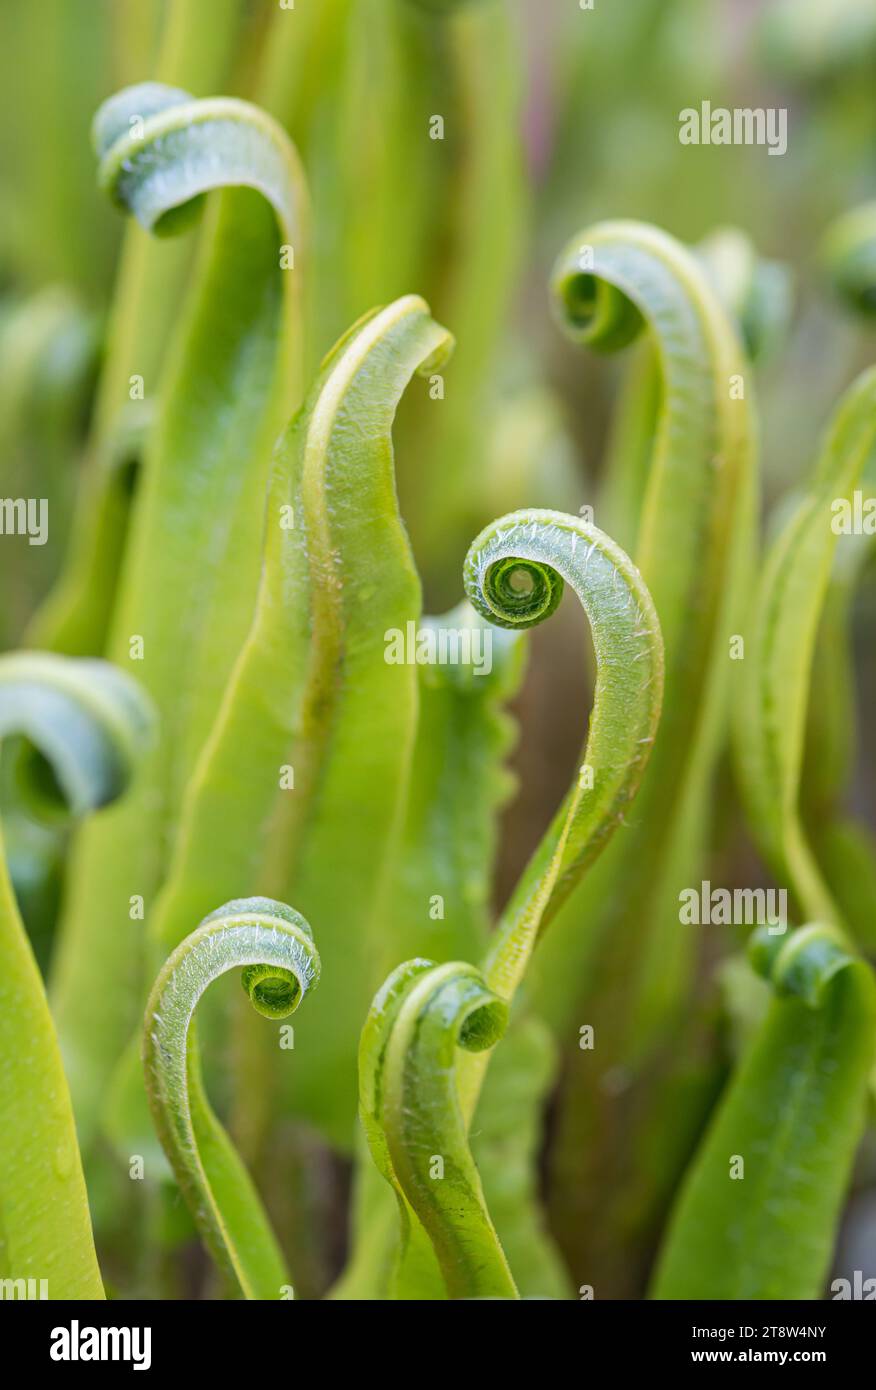 Group of unfurling spiral fern leaves, April Stock Photo